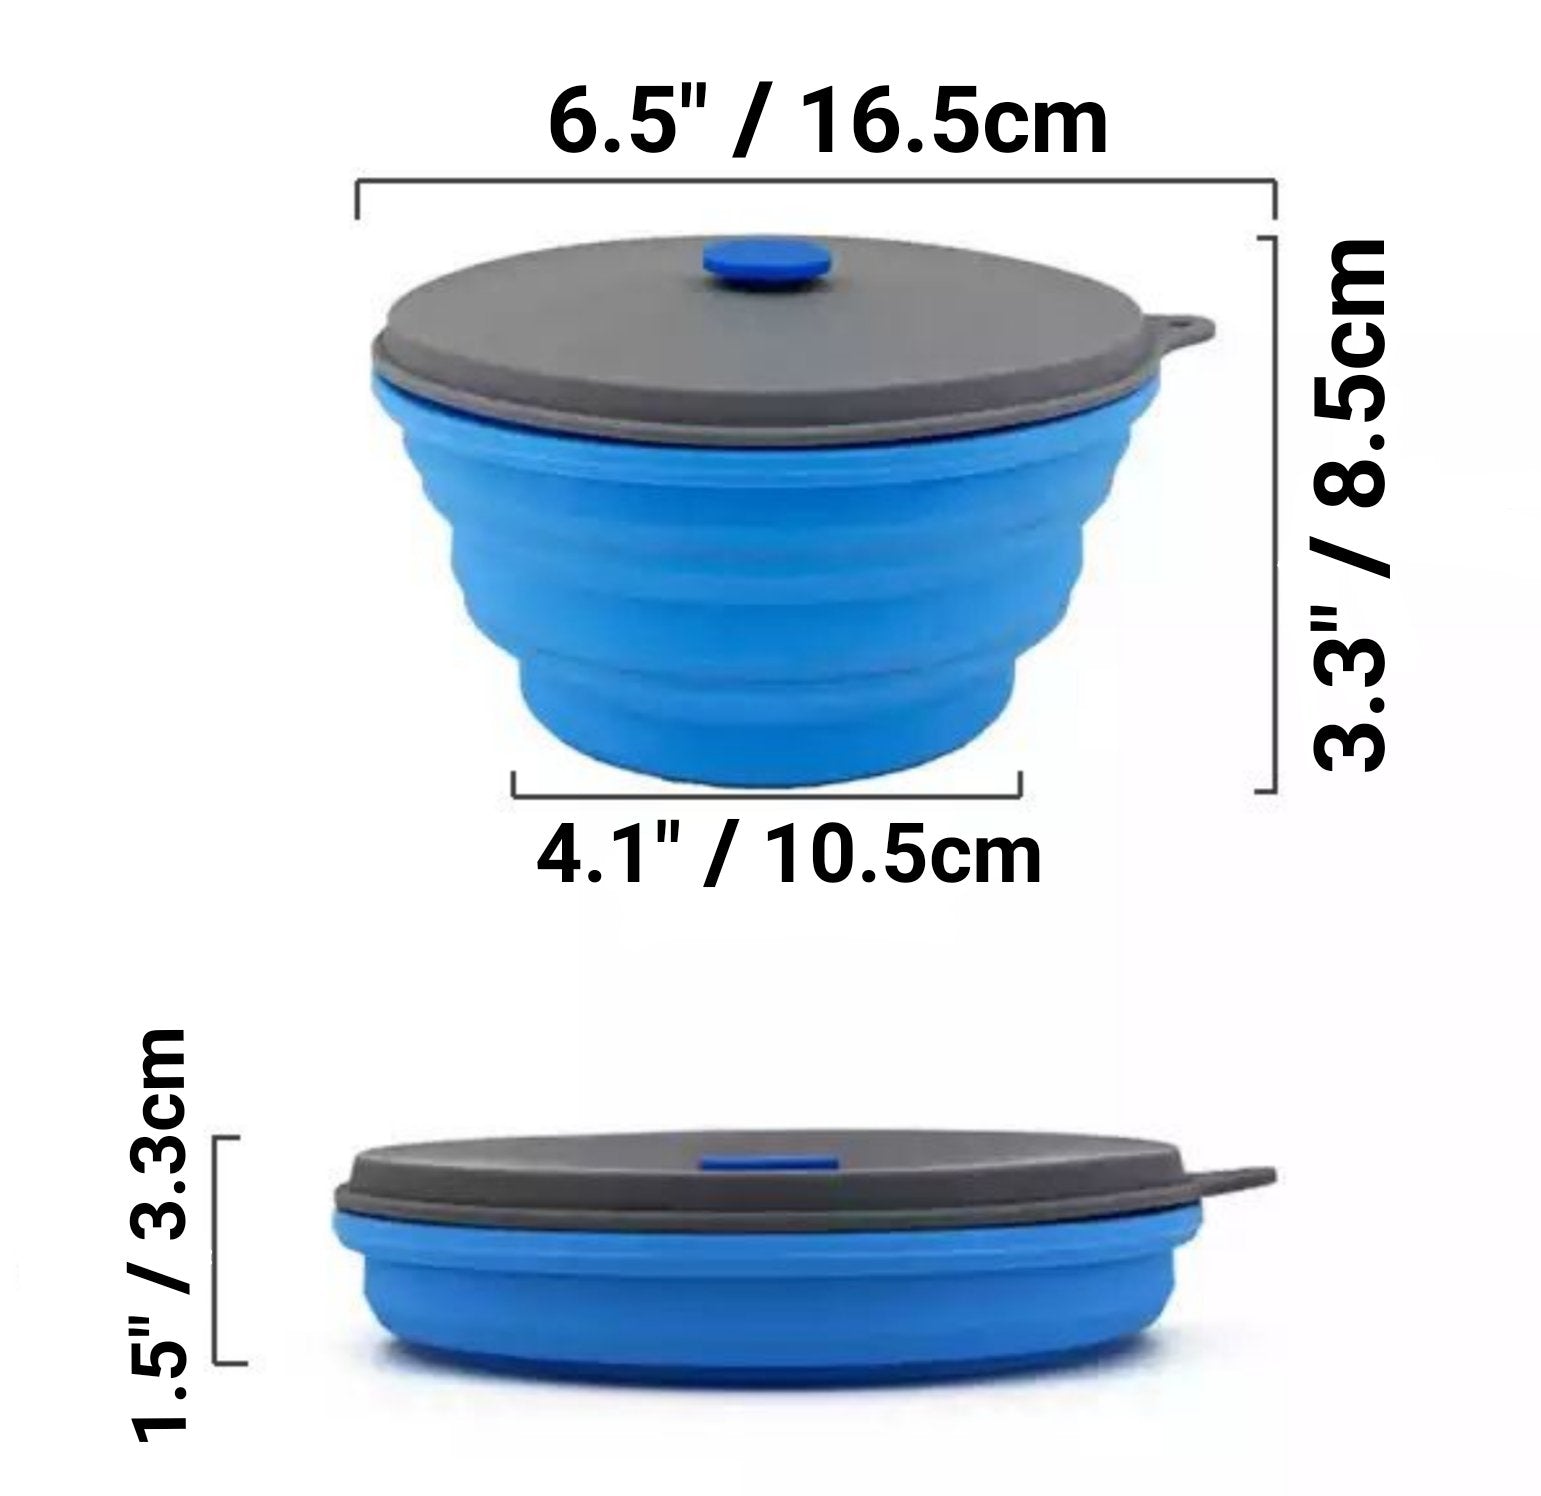 Portable Silicone Folding Bowl - Heat Resistant, Reusable